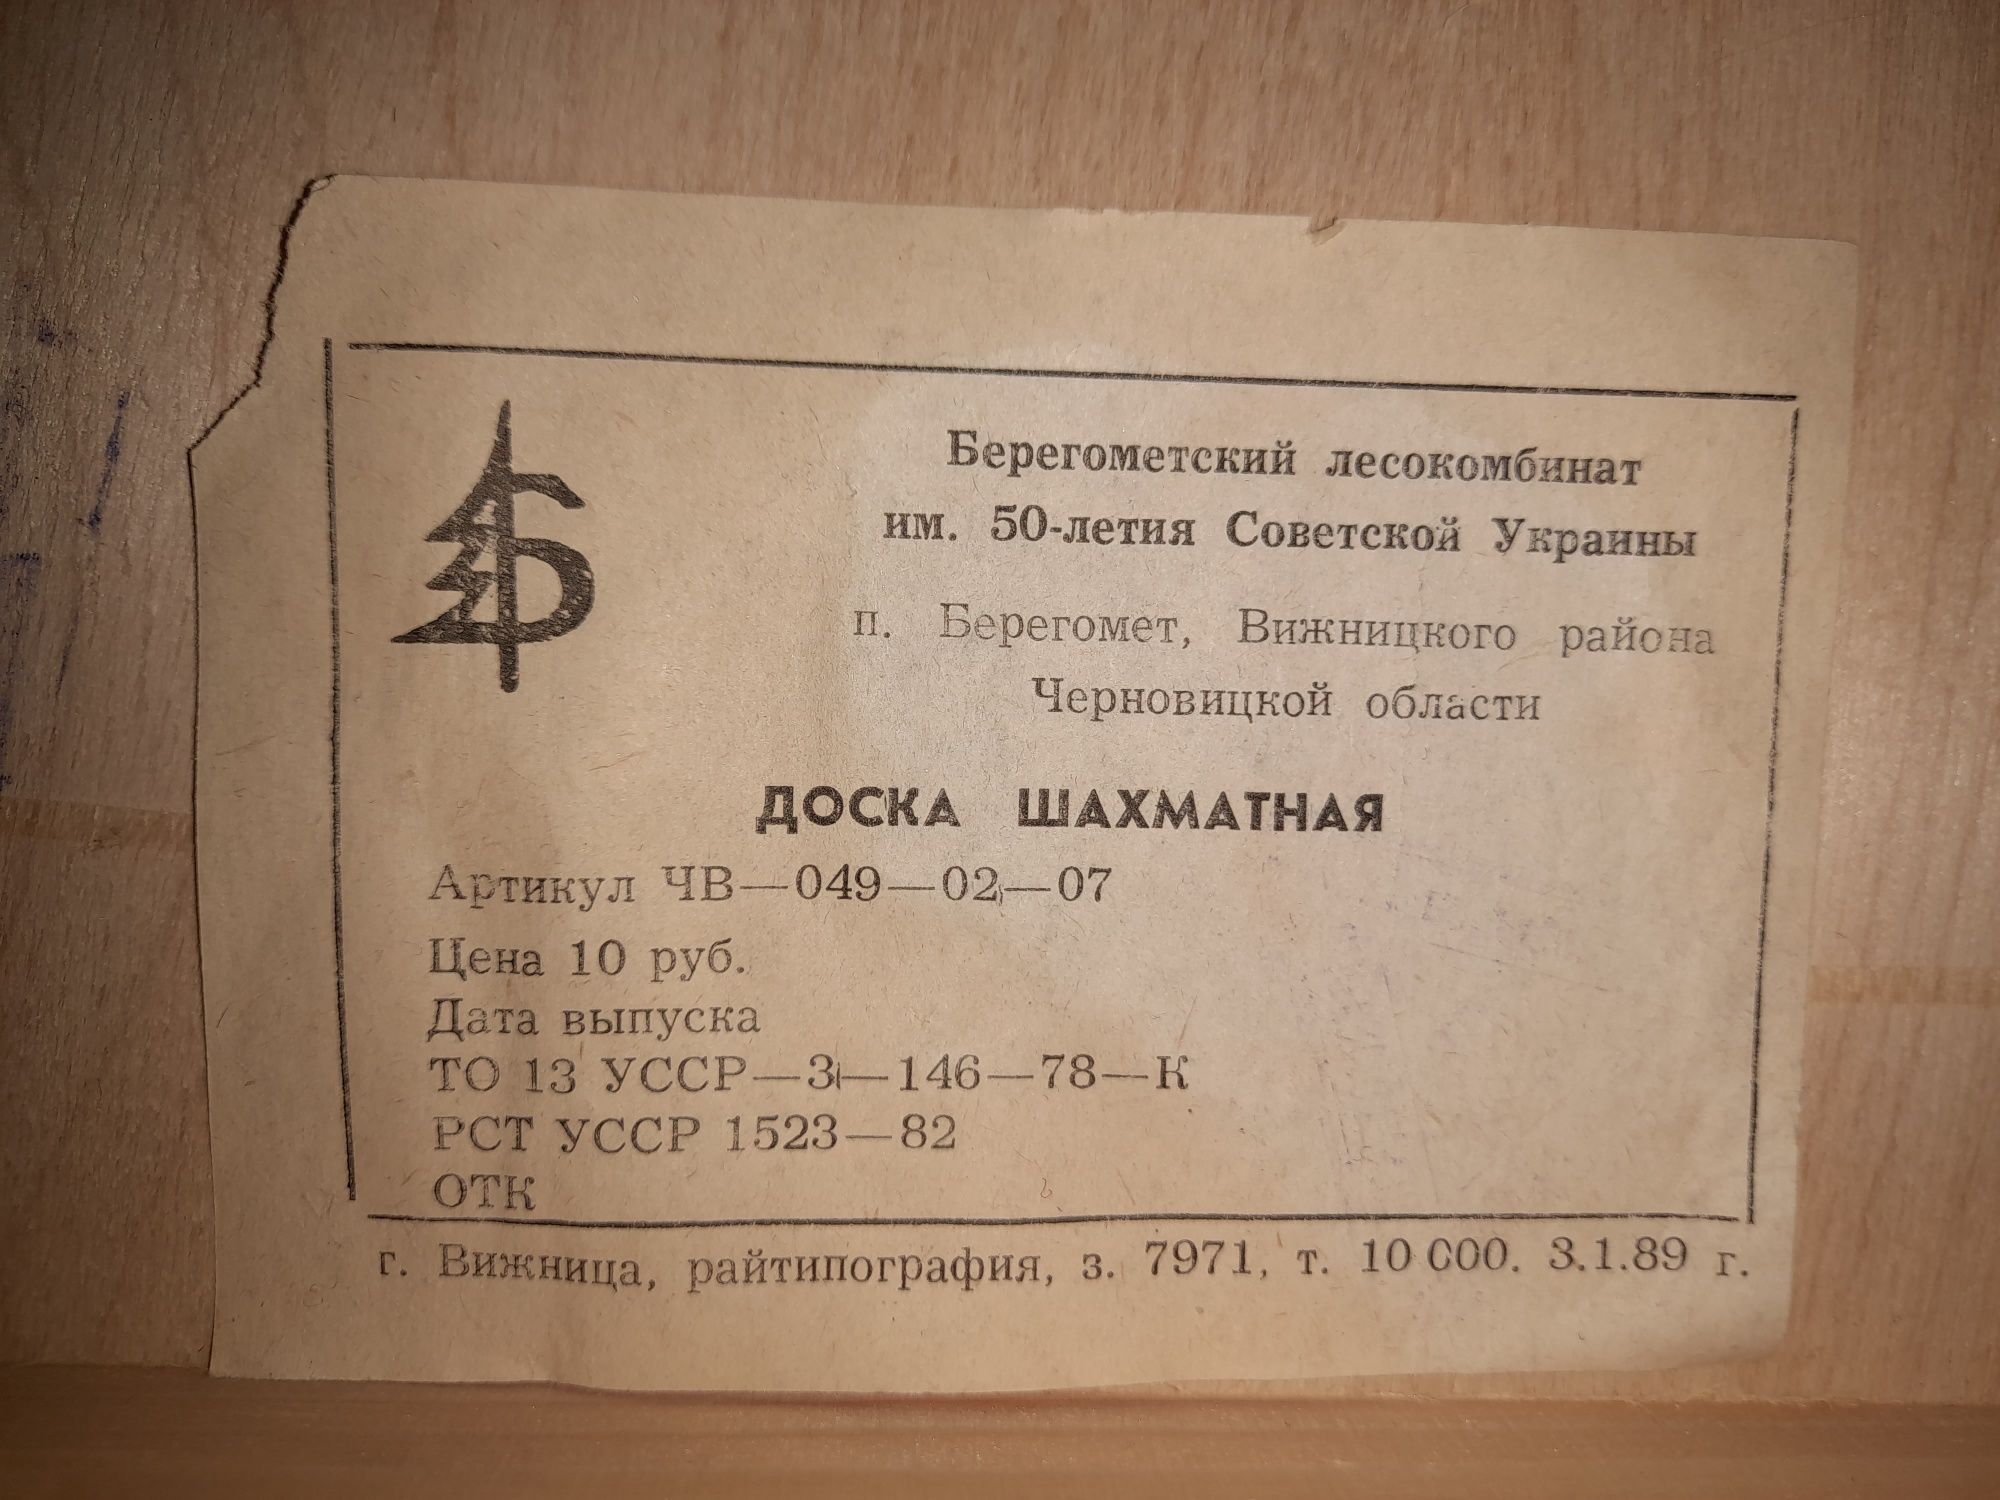 Продаються шахматы РСТ УССР.НОВЫЕ 1989 ГОДА.